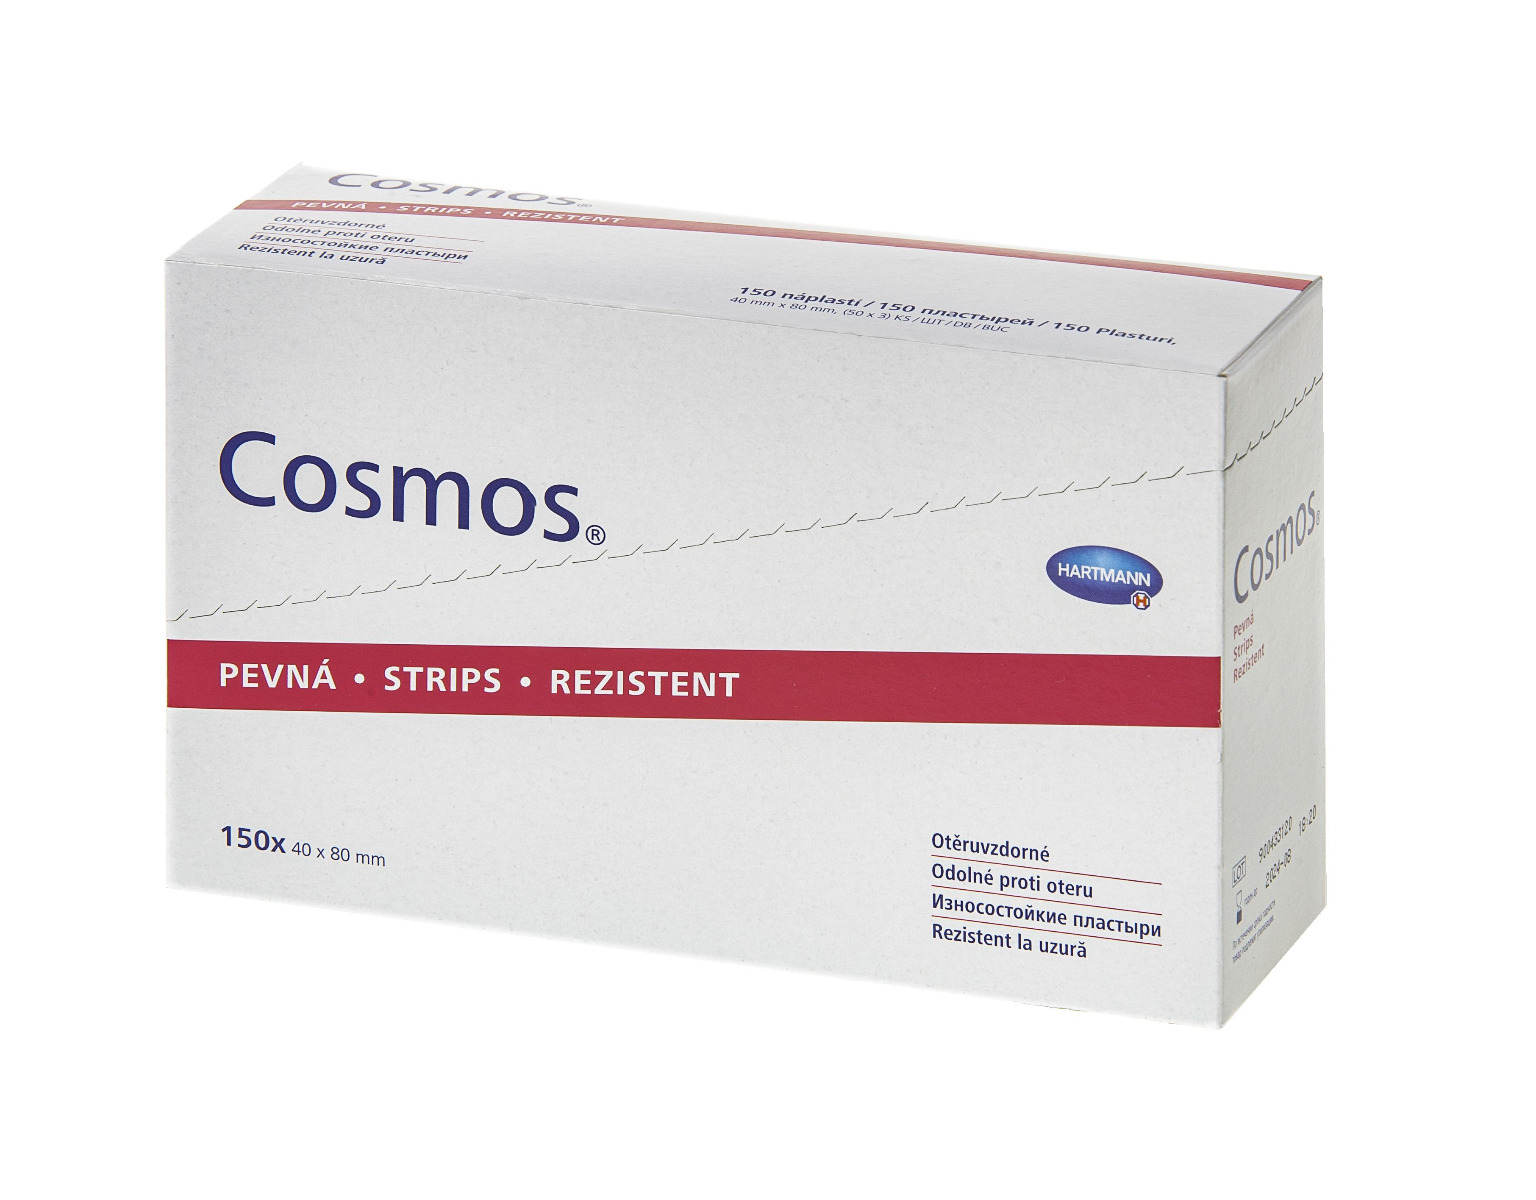 Cosmos Strips Pevná náplast 40x80 mm 150 ks Cosmos